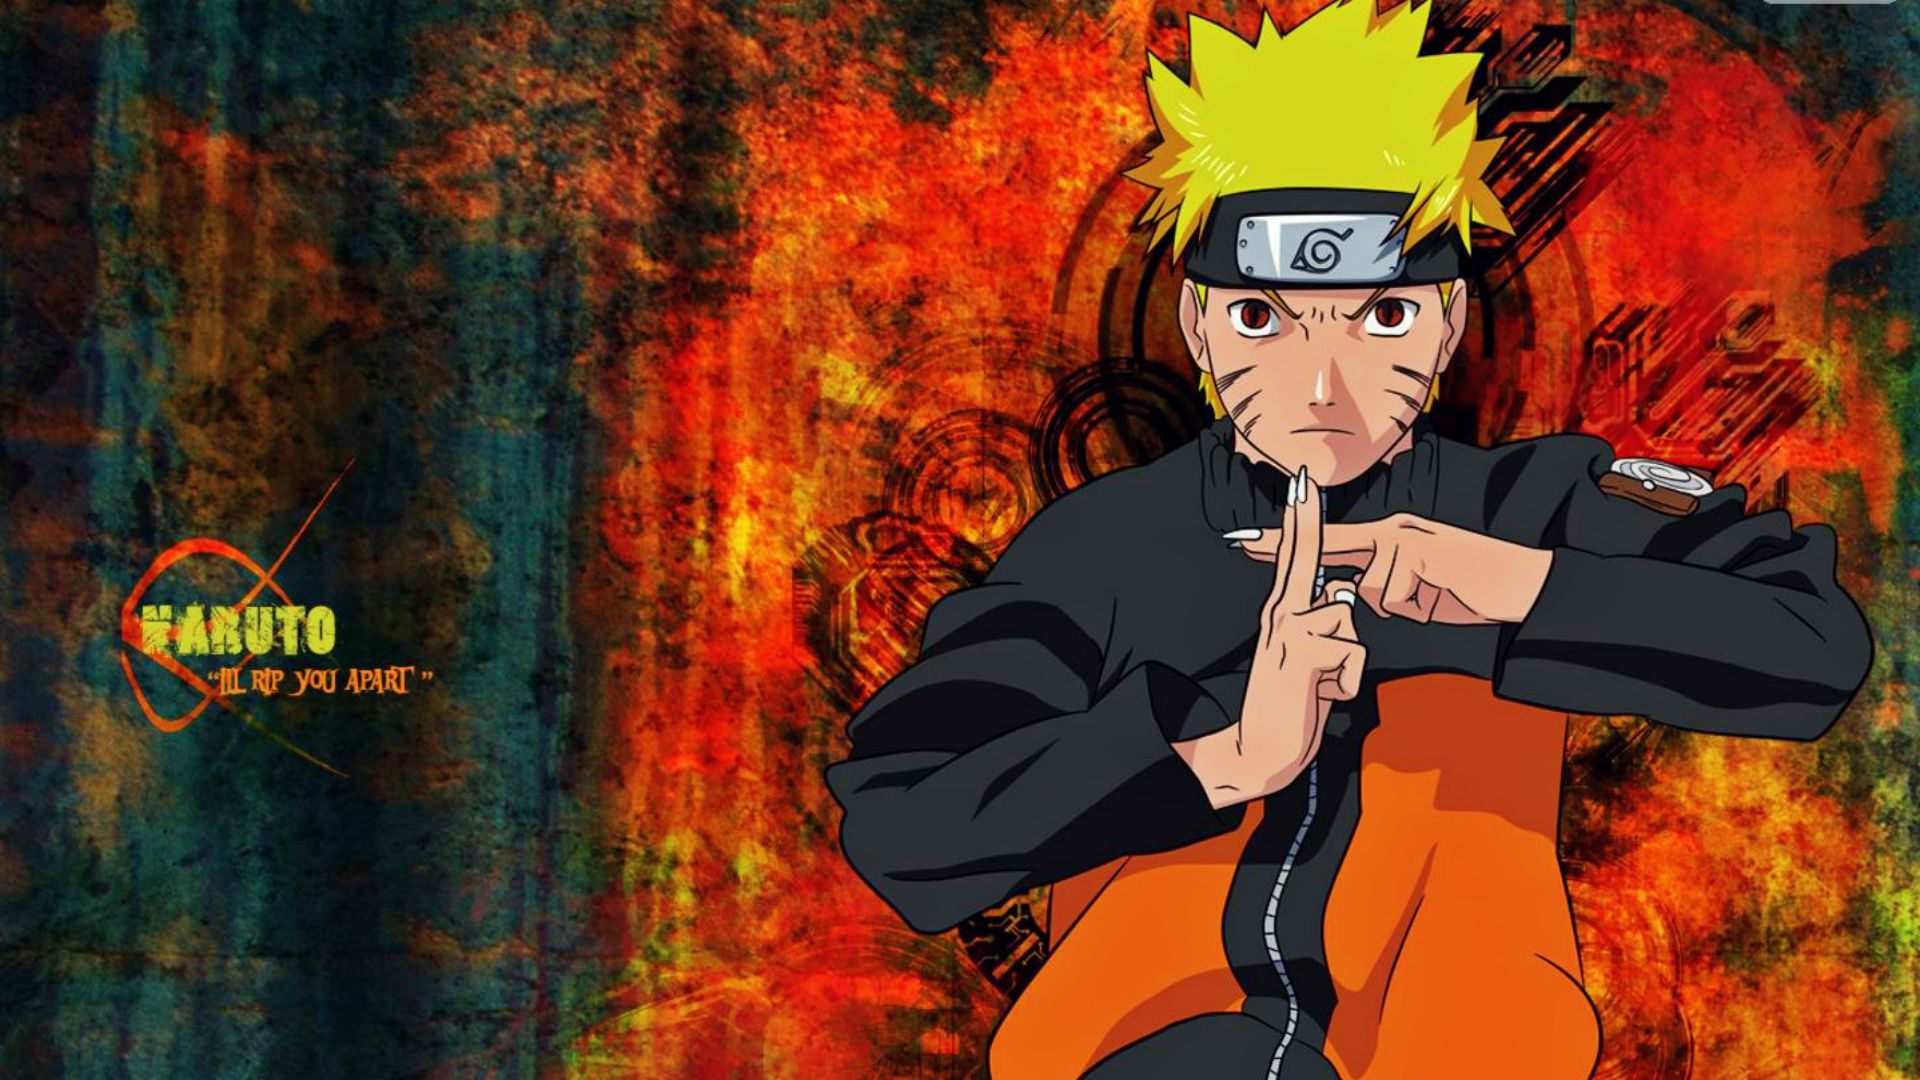 48+] Naruto HD Wallpapers 1080p - WallpaperSafari